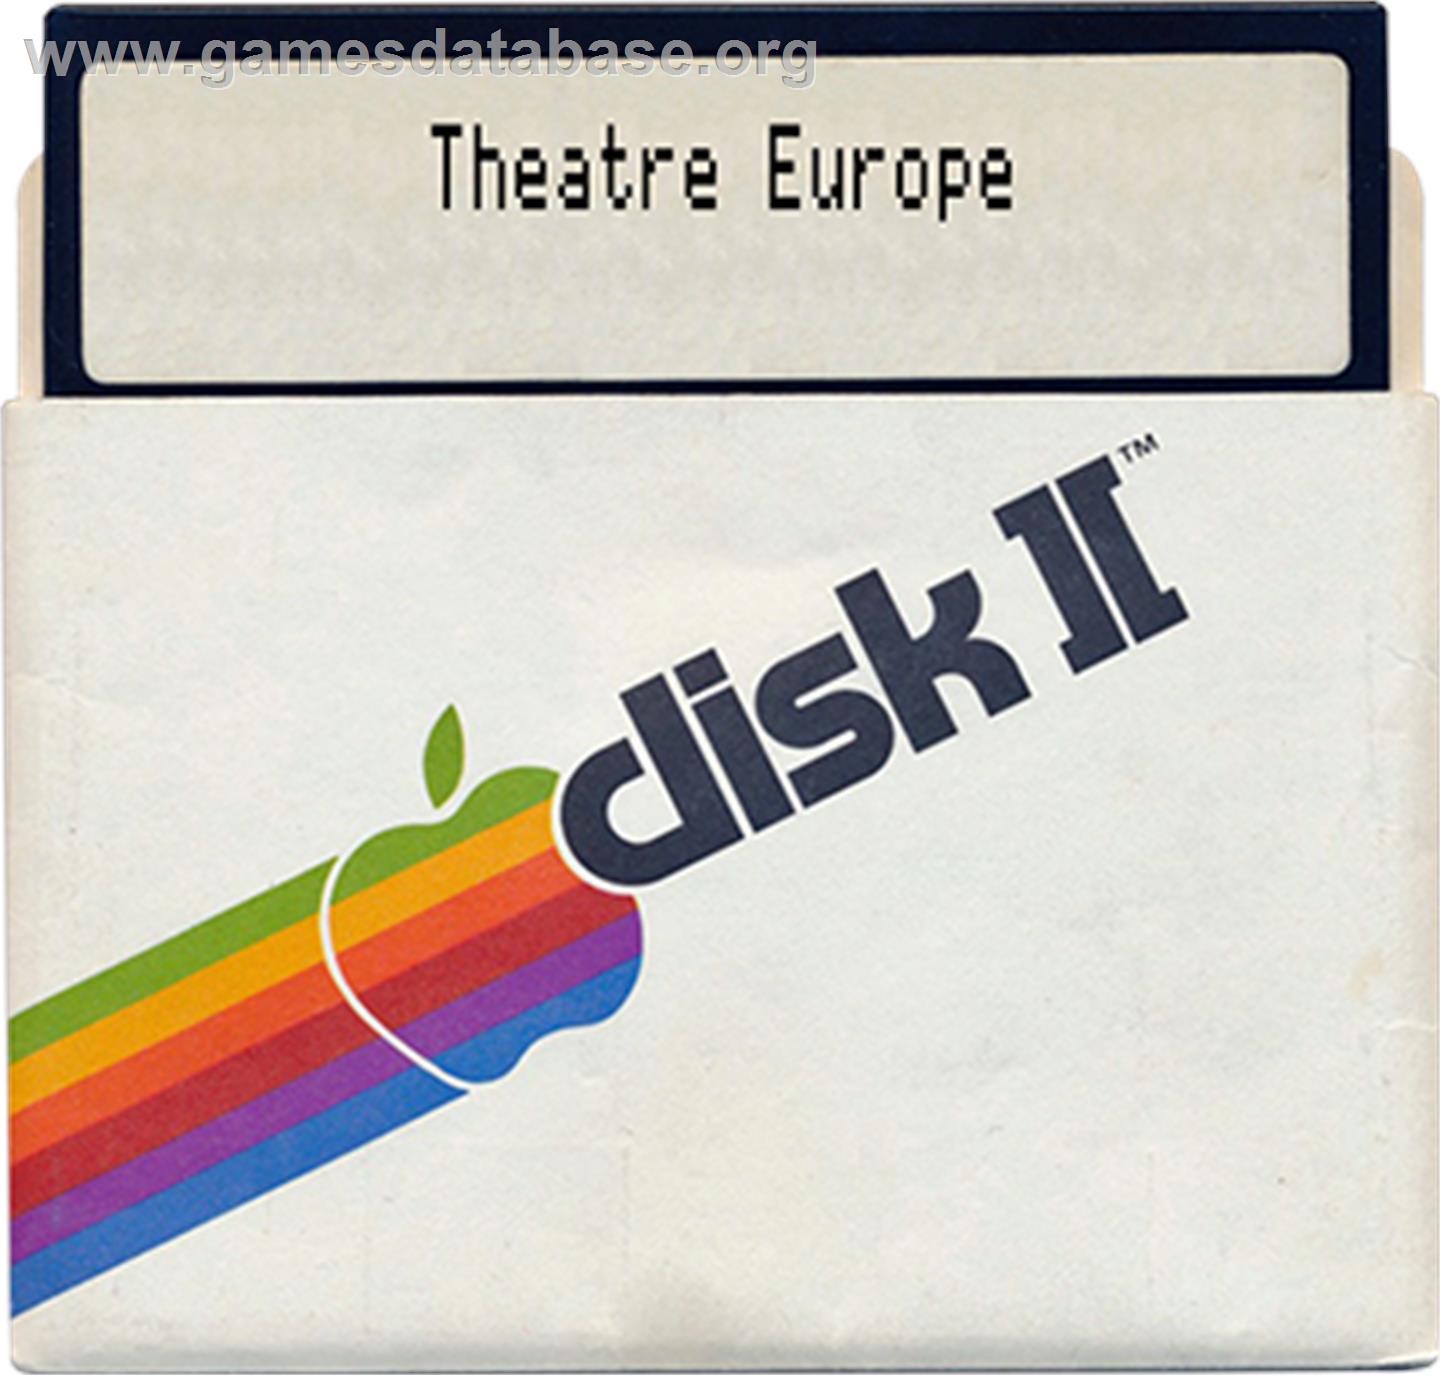 Theatre Europe - Apple II - Artwork - Disc